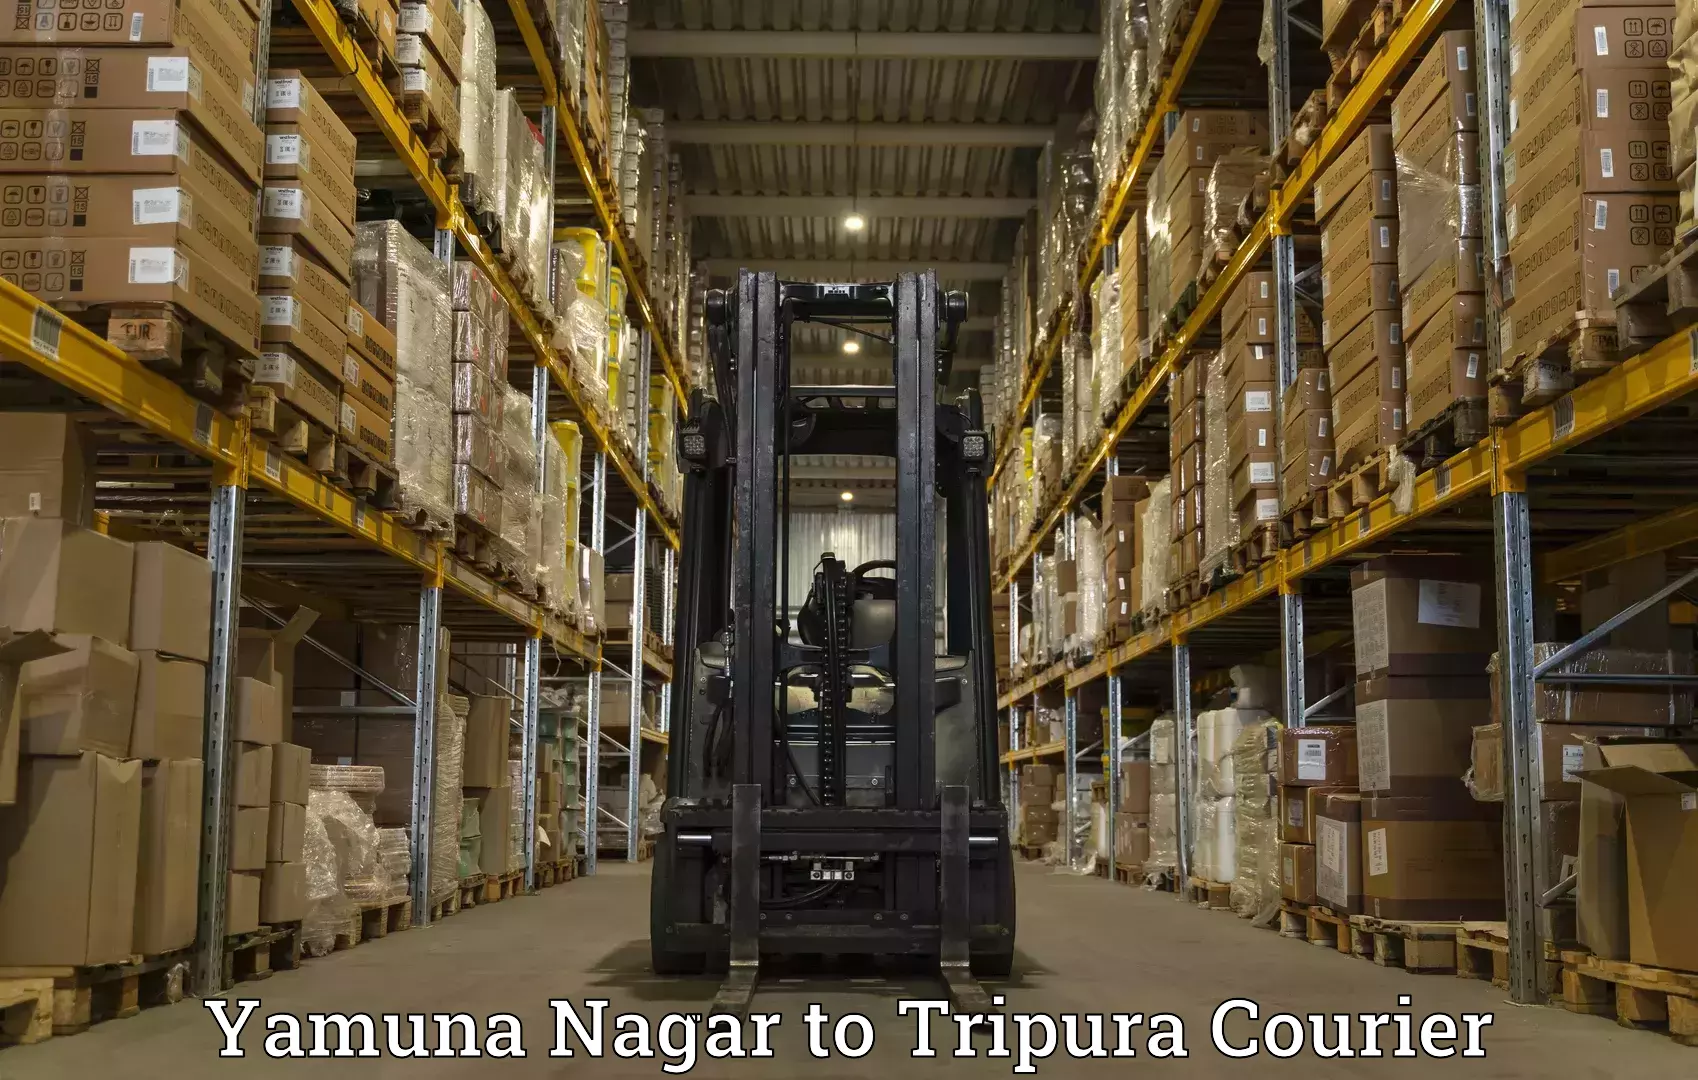 Global logistics network Yamuna Nagar to Tripura